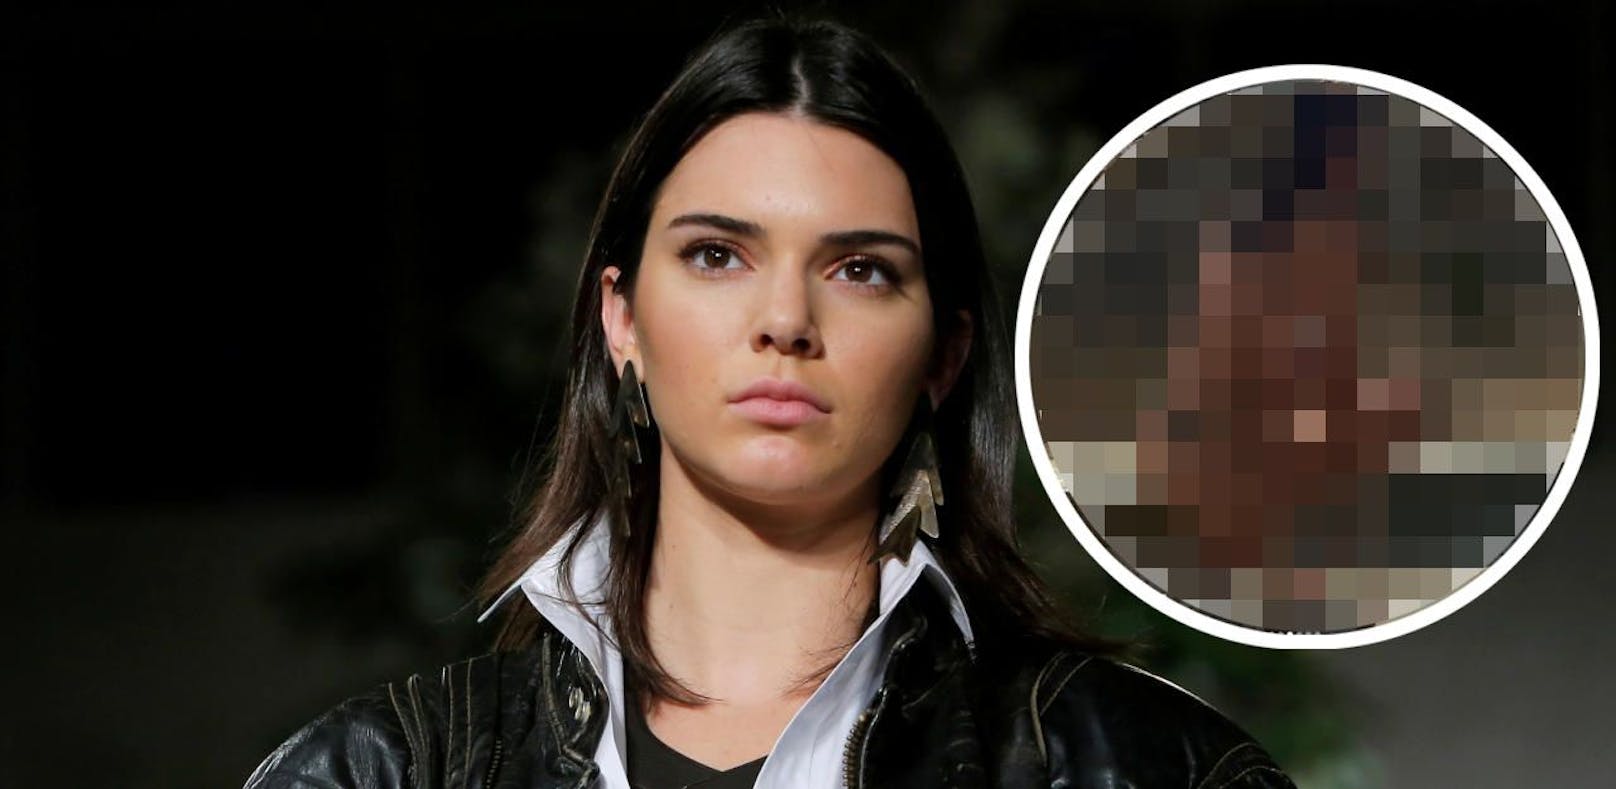 Photoshop-Fail – Darum spotten Fans über Kendall Jenner